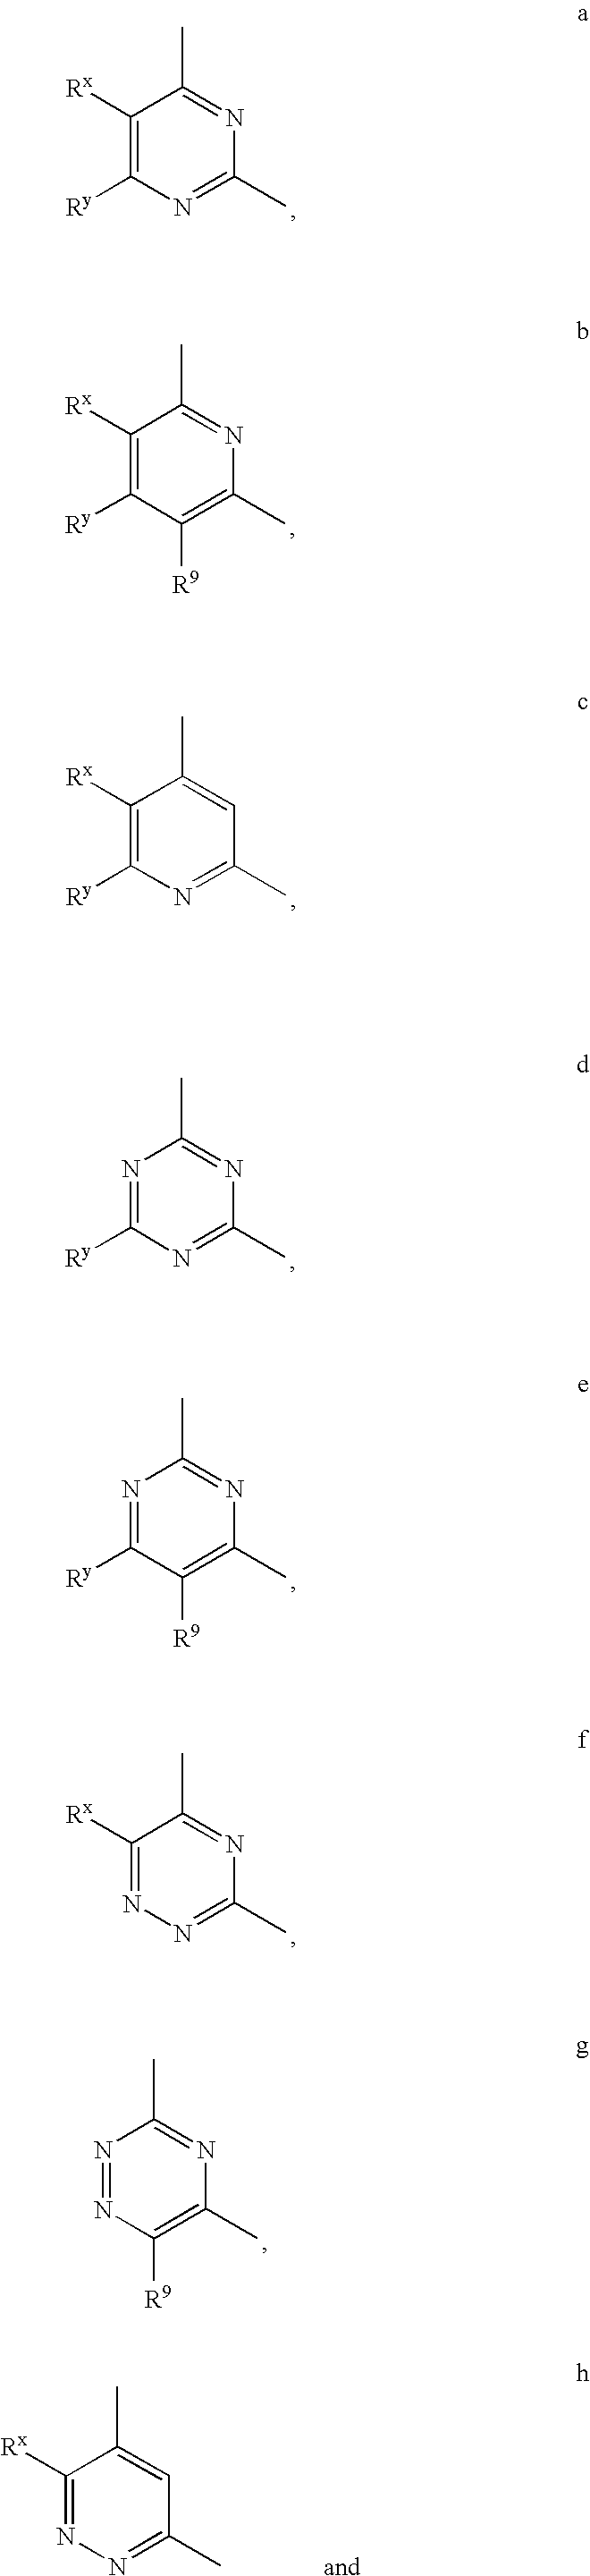 Fused pyrimidyl pyrazole compounds useful as protein kinase inhibitors